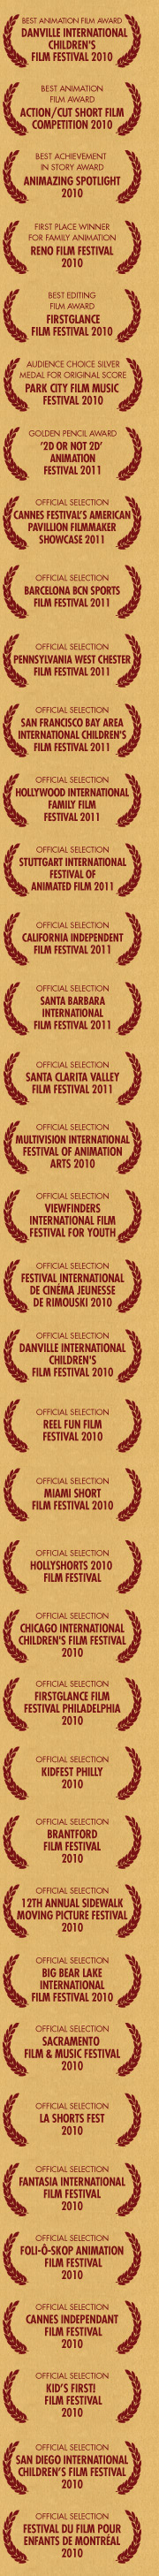 Film Festival Selection